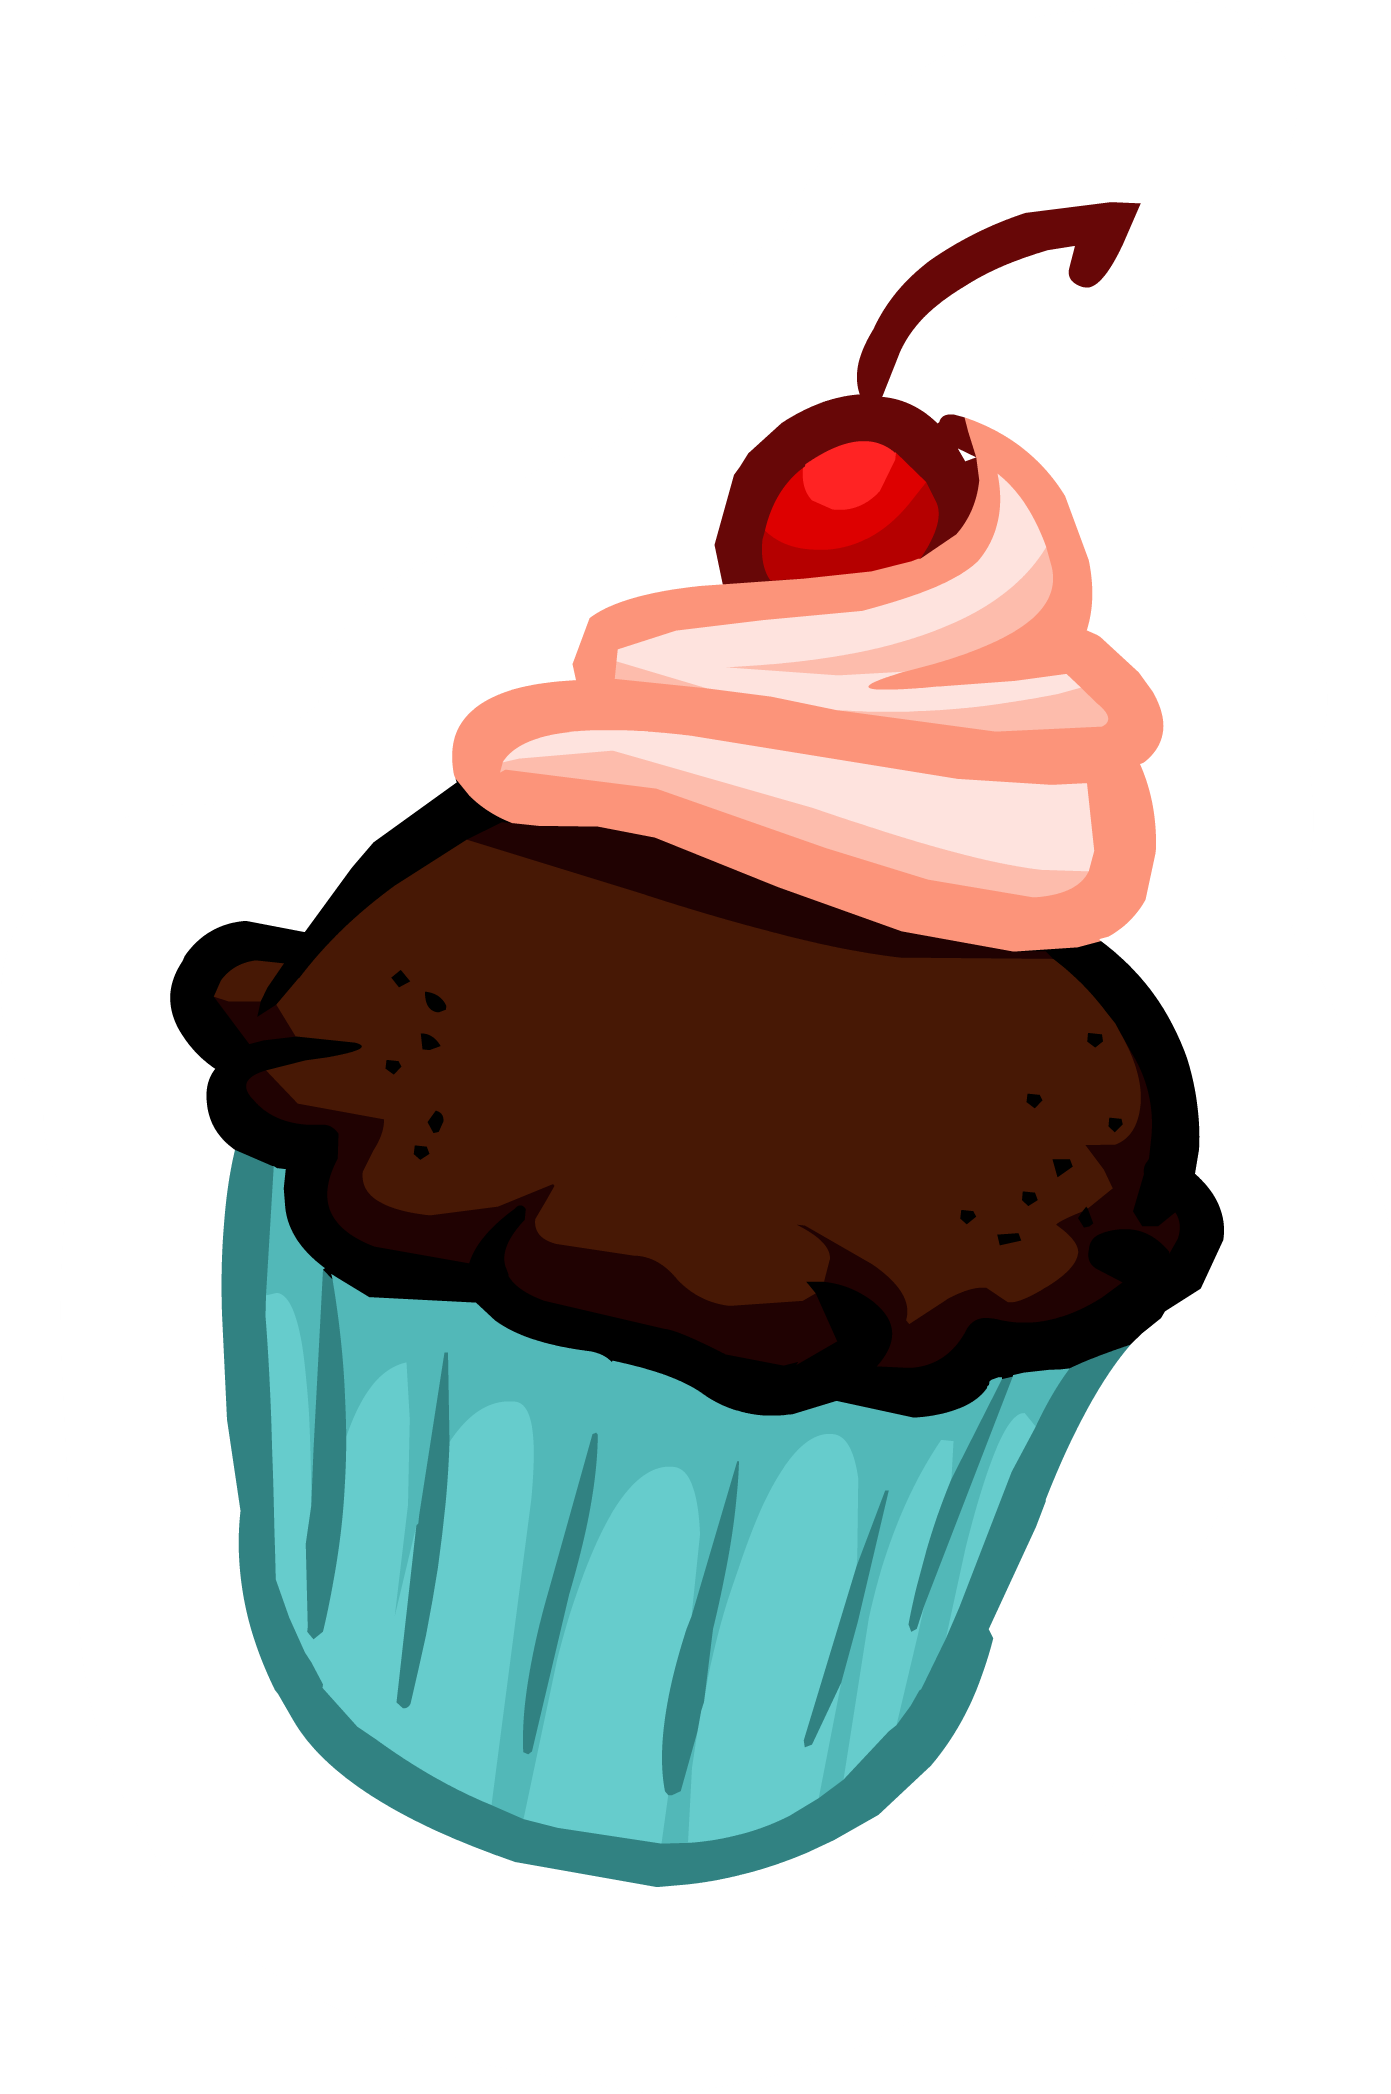 Cupcake Pin - Club Penguin Cupcake Pin (1391x2094)